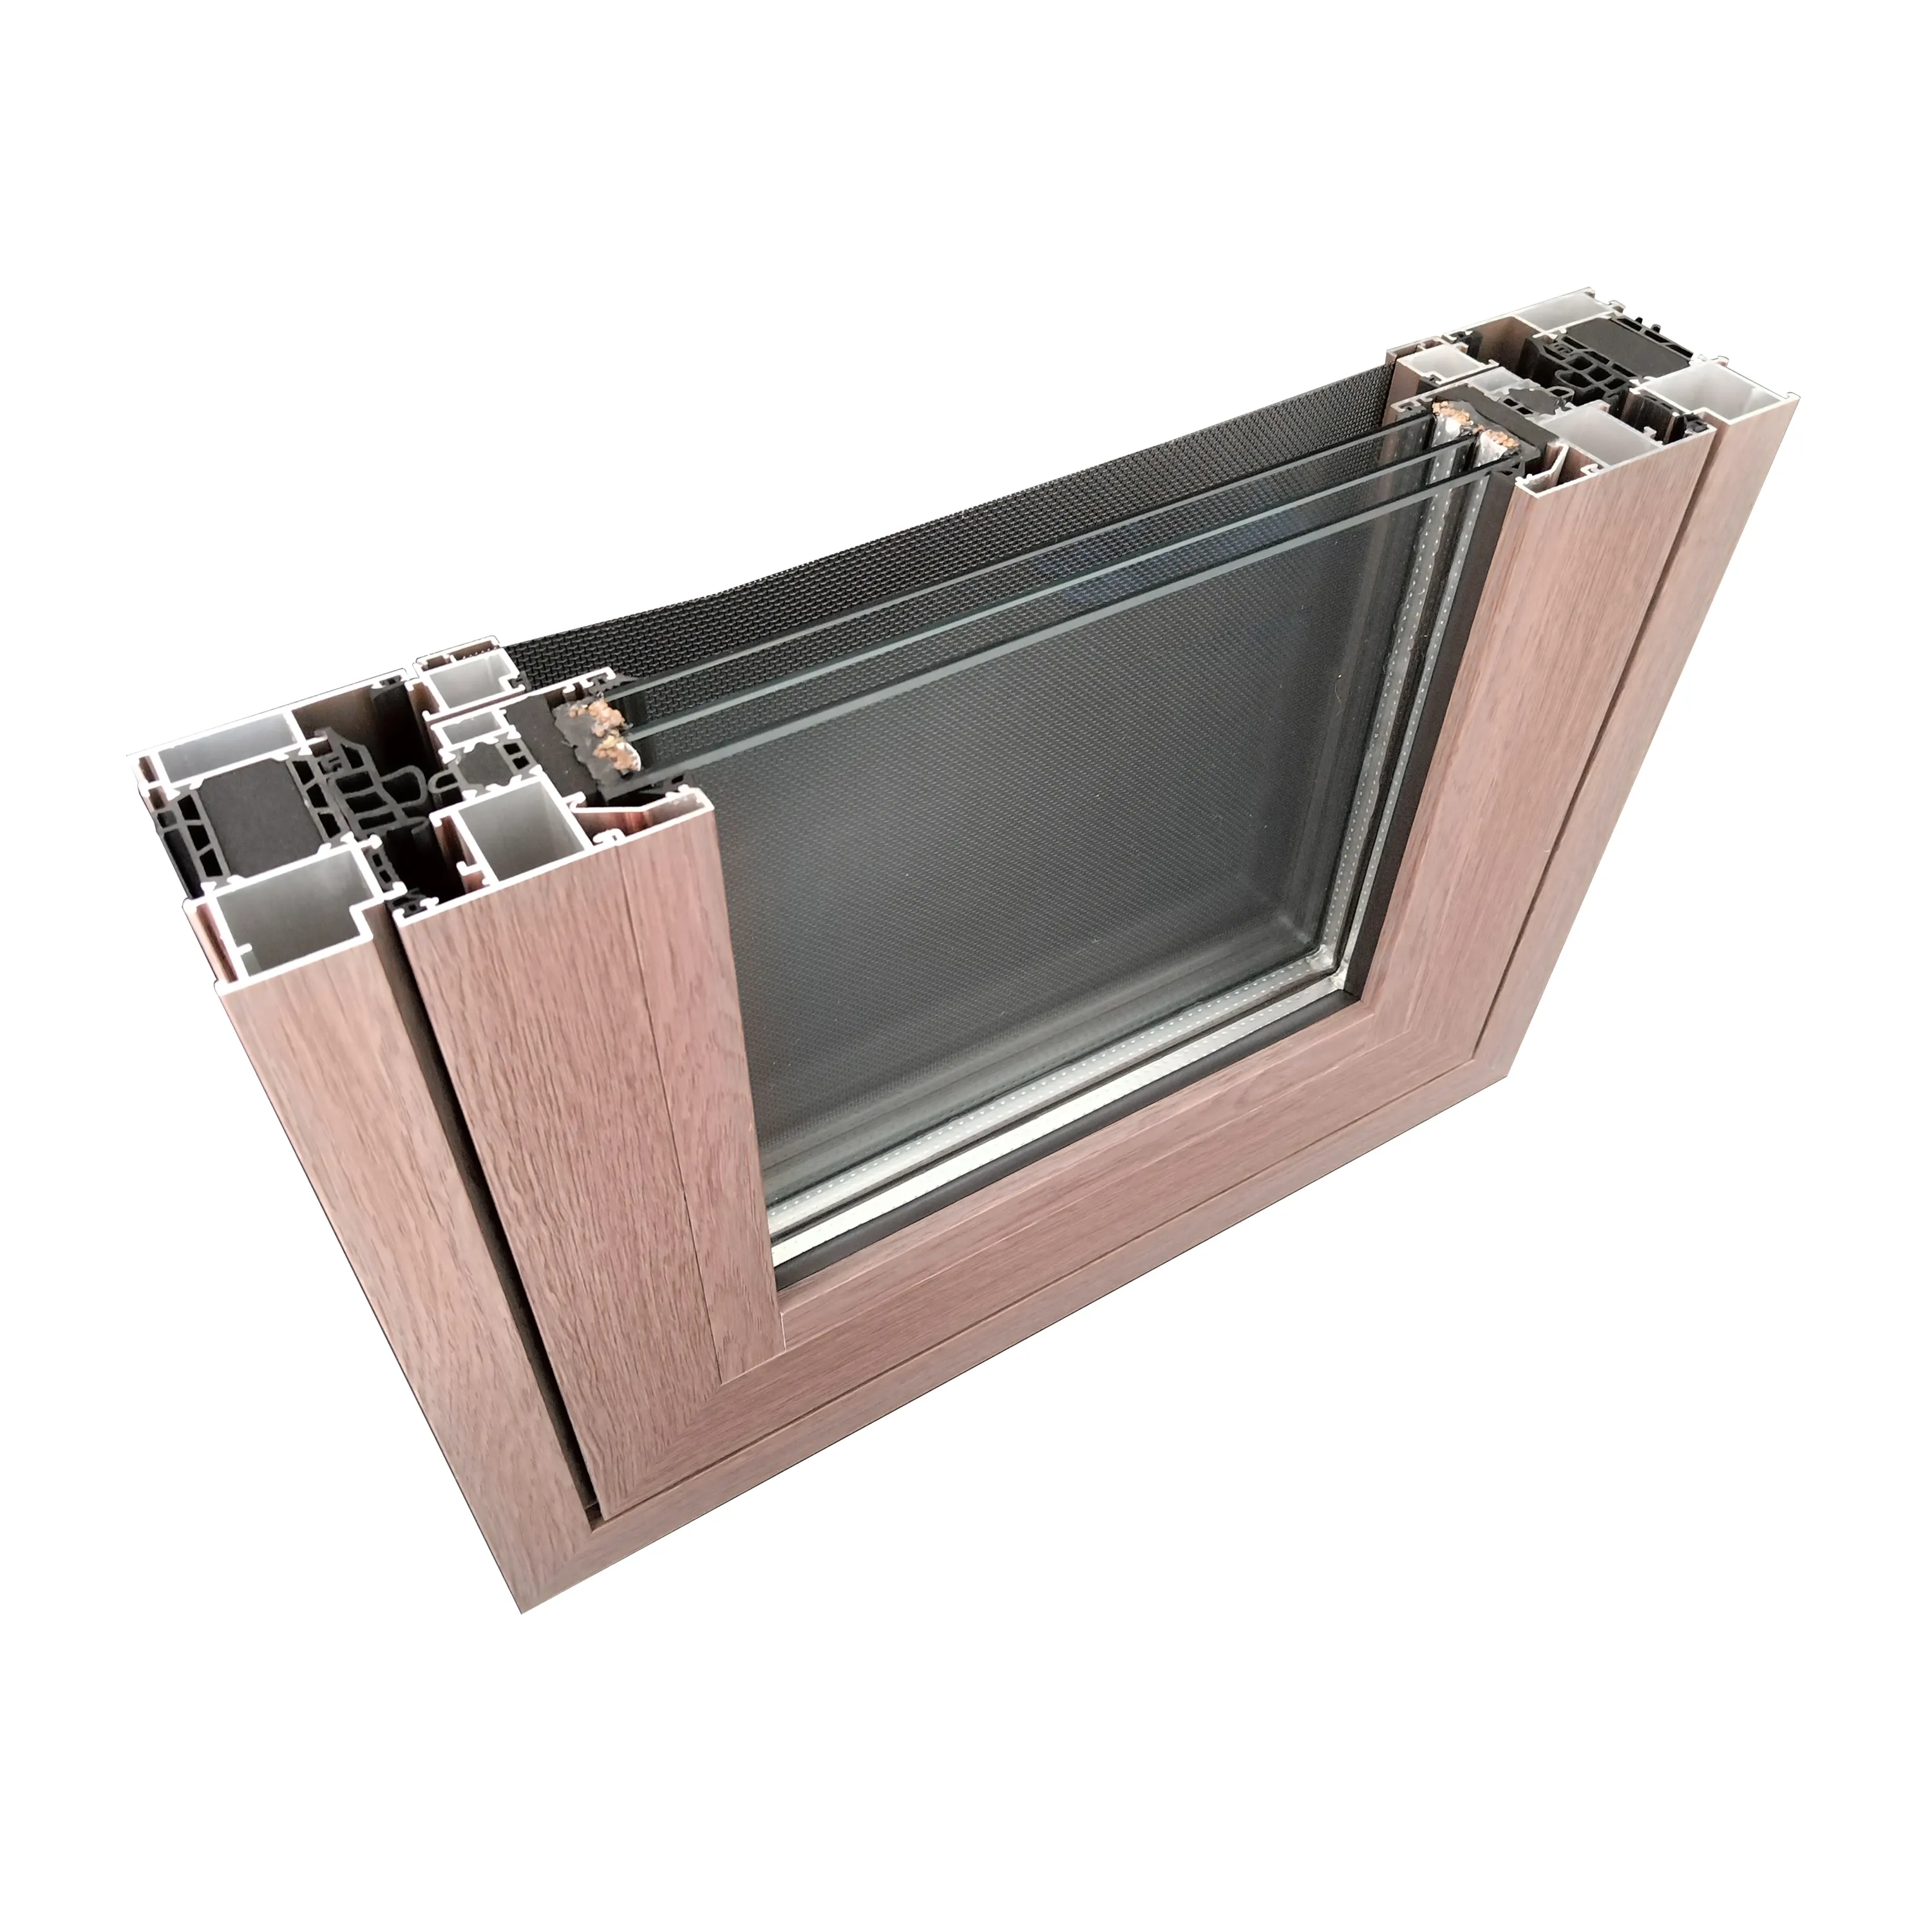 China supplier windows and doors aluminum profiles aluminum extrusion profile for windows and doors furniture